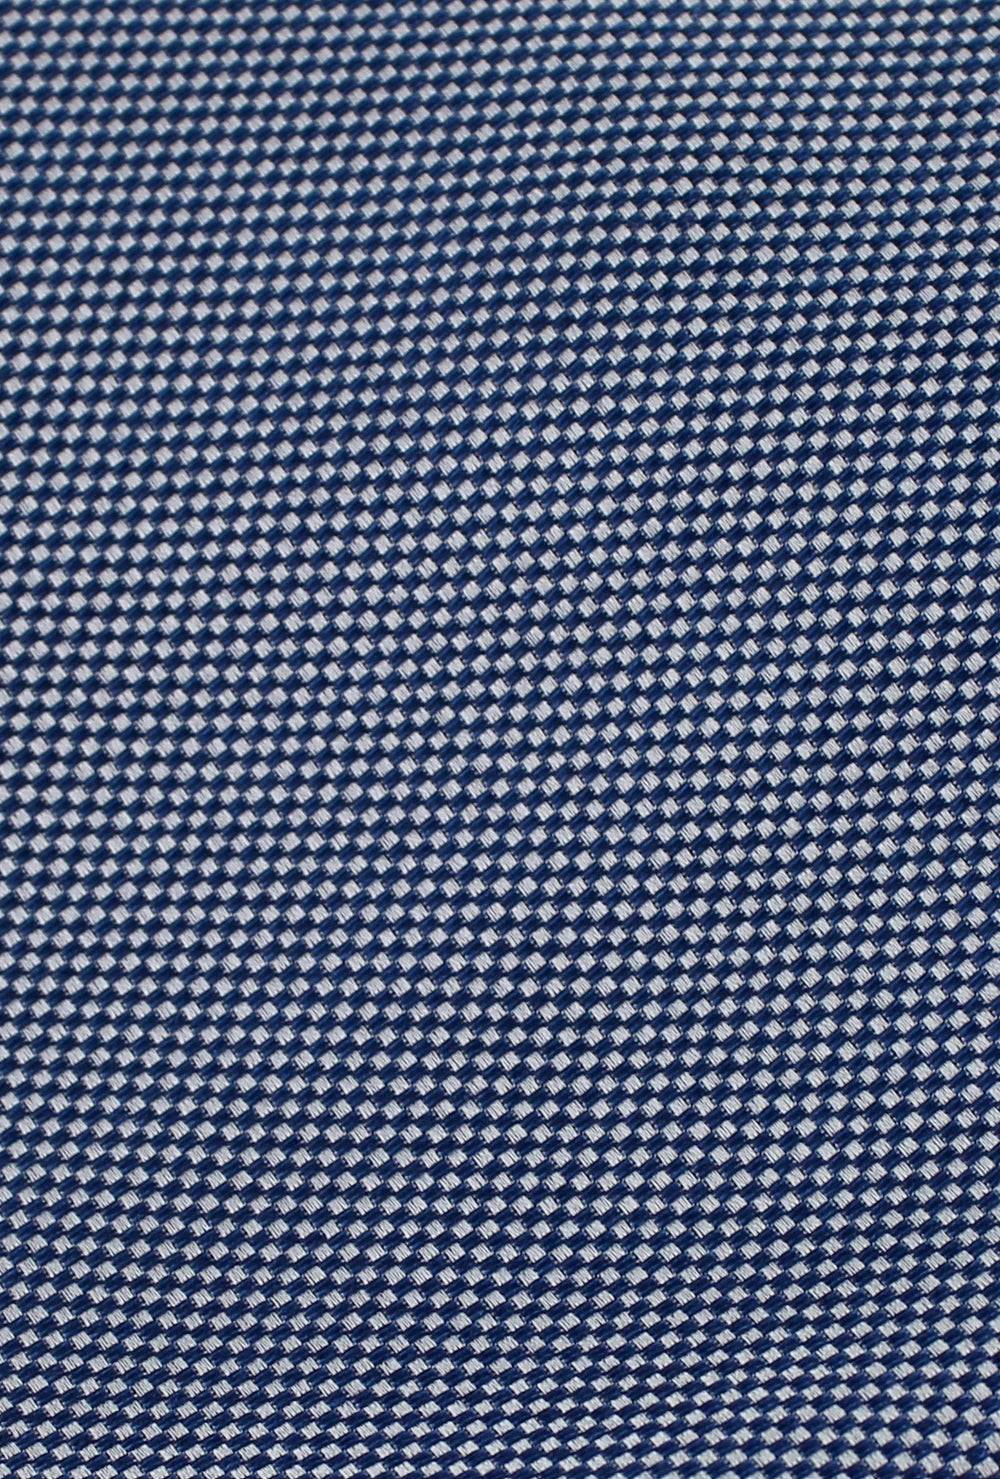 Cravate bleu marine à motifs blancs